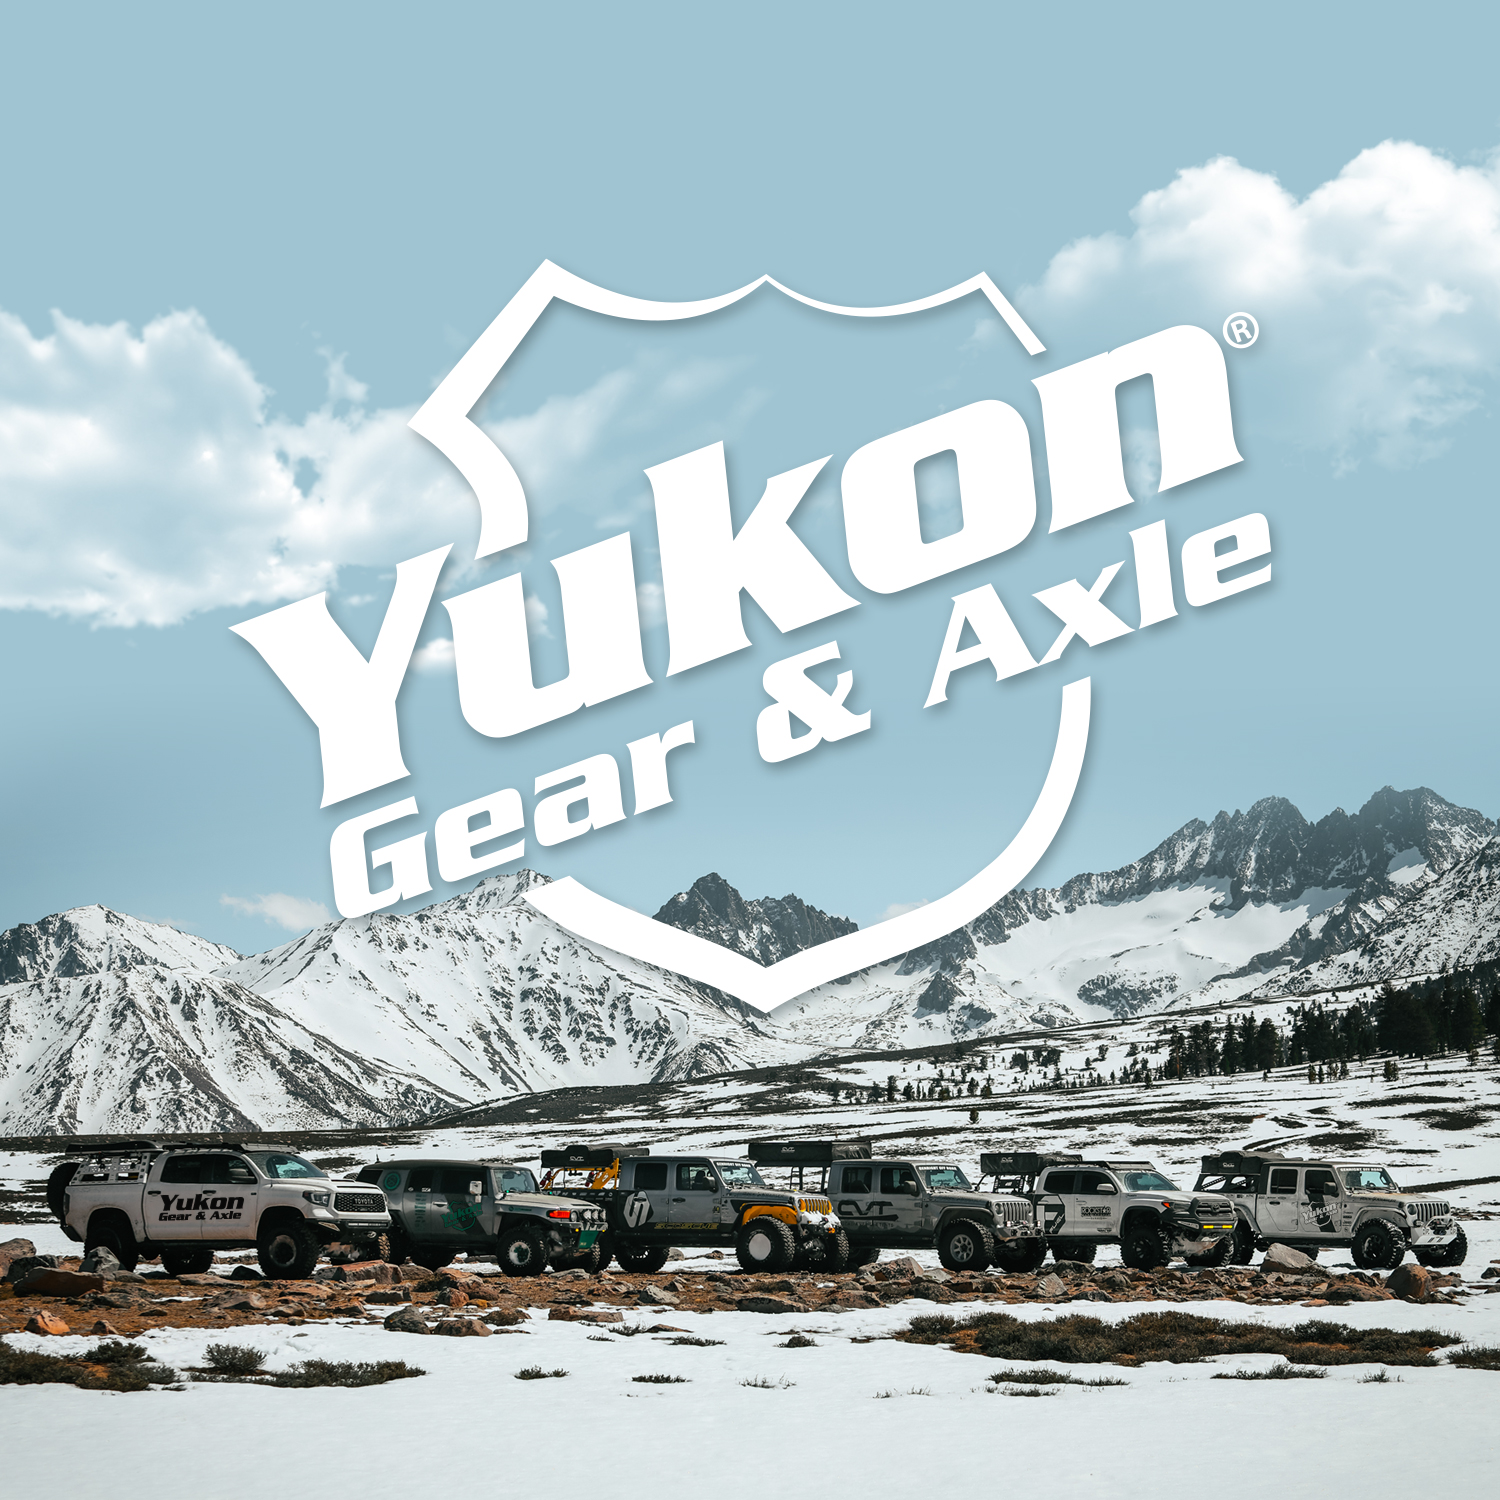 Yukon high performance replacement ring & pinion set, Dana S130, 4.30 ratio 